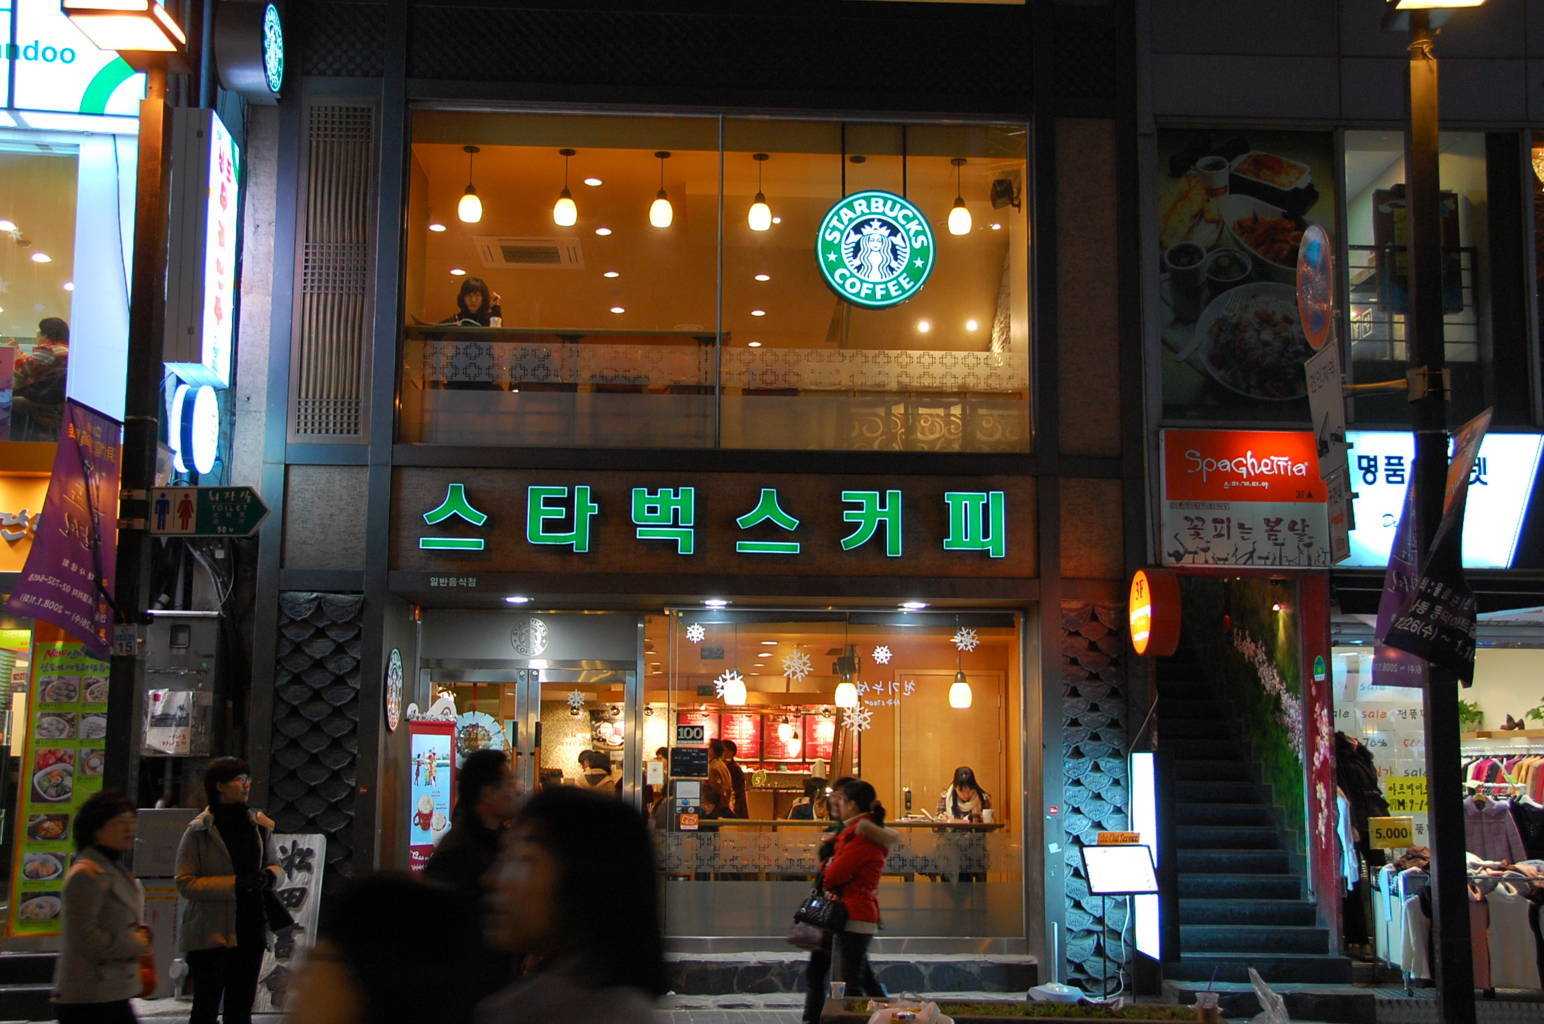 Background image of Starbucks shop